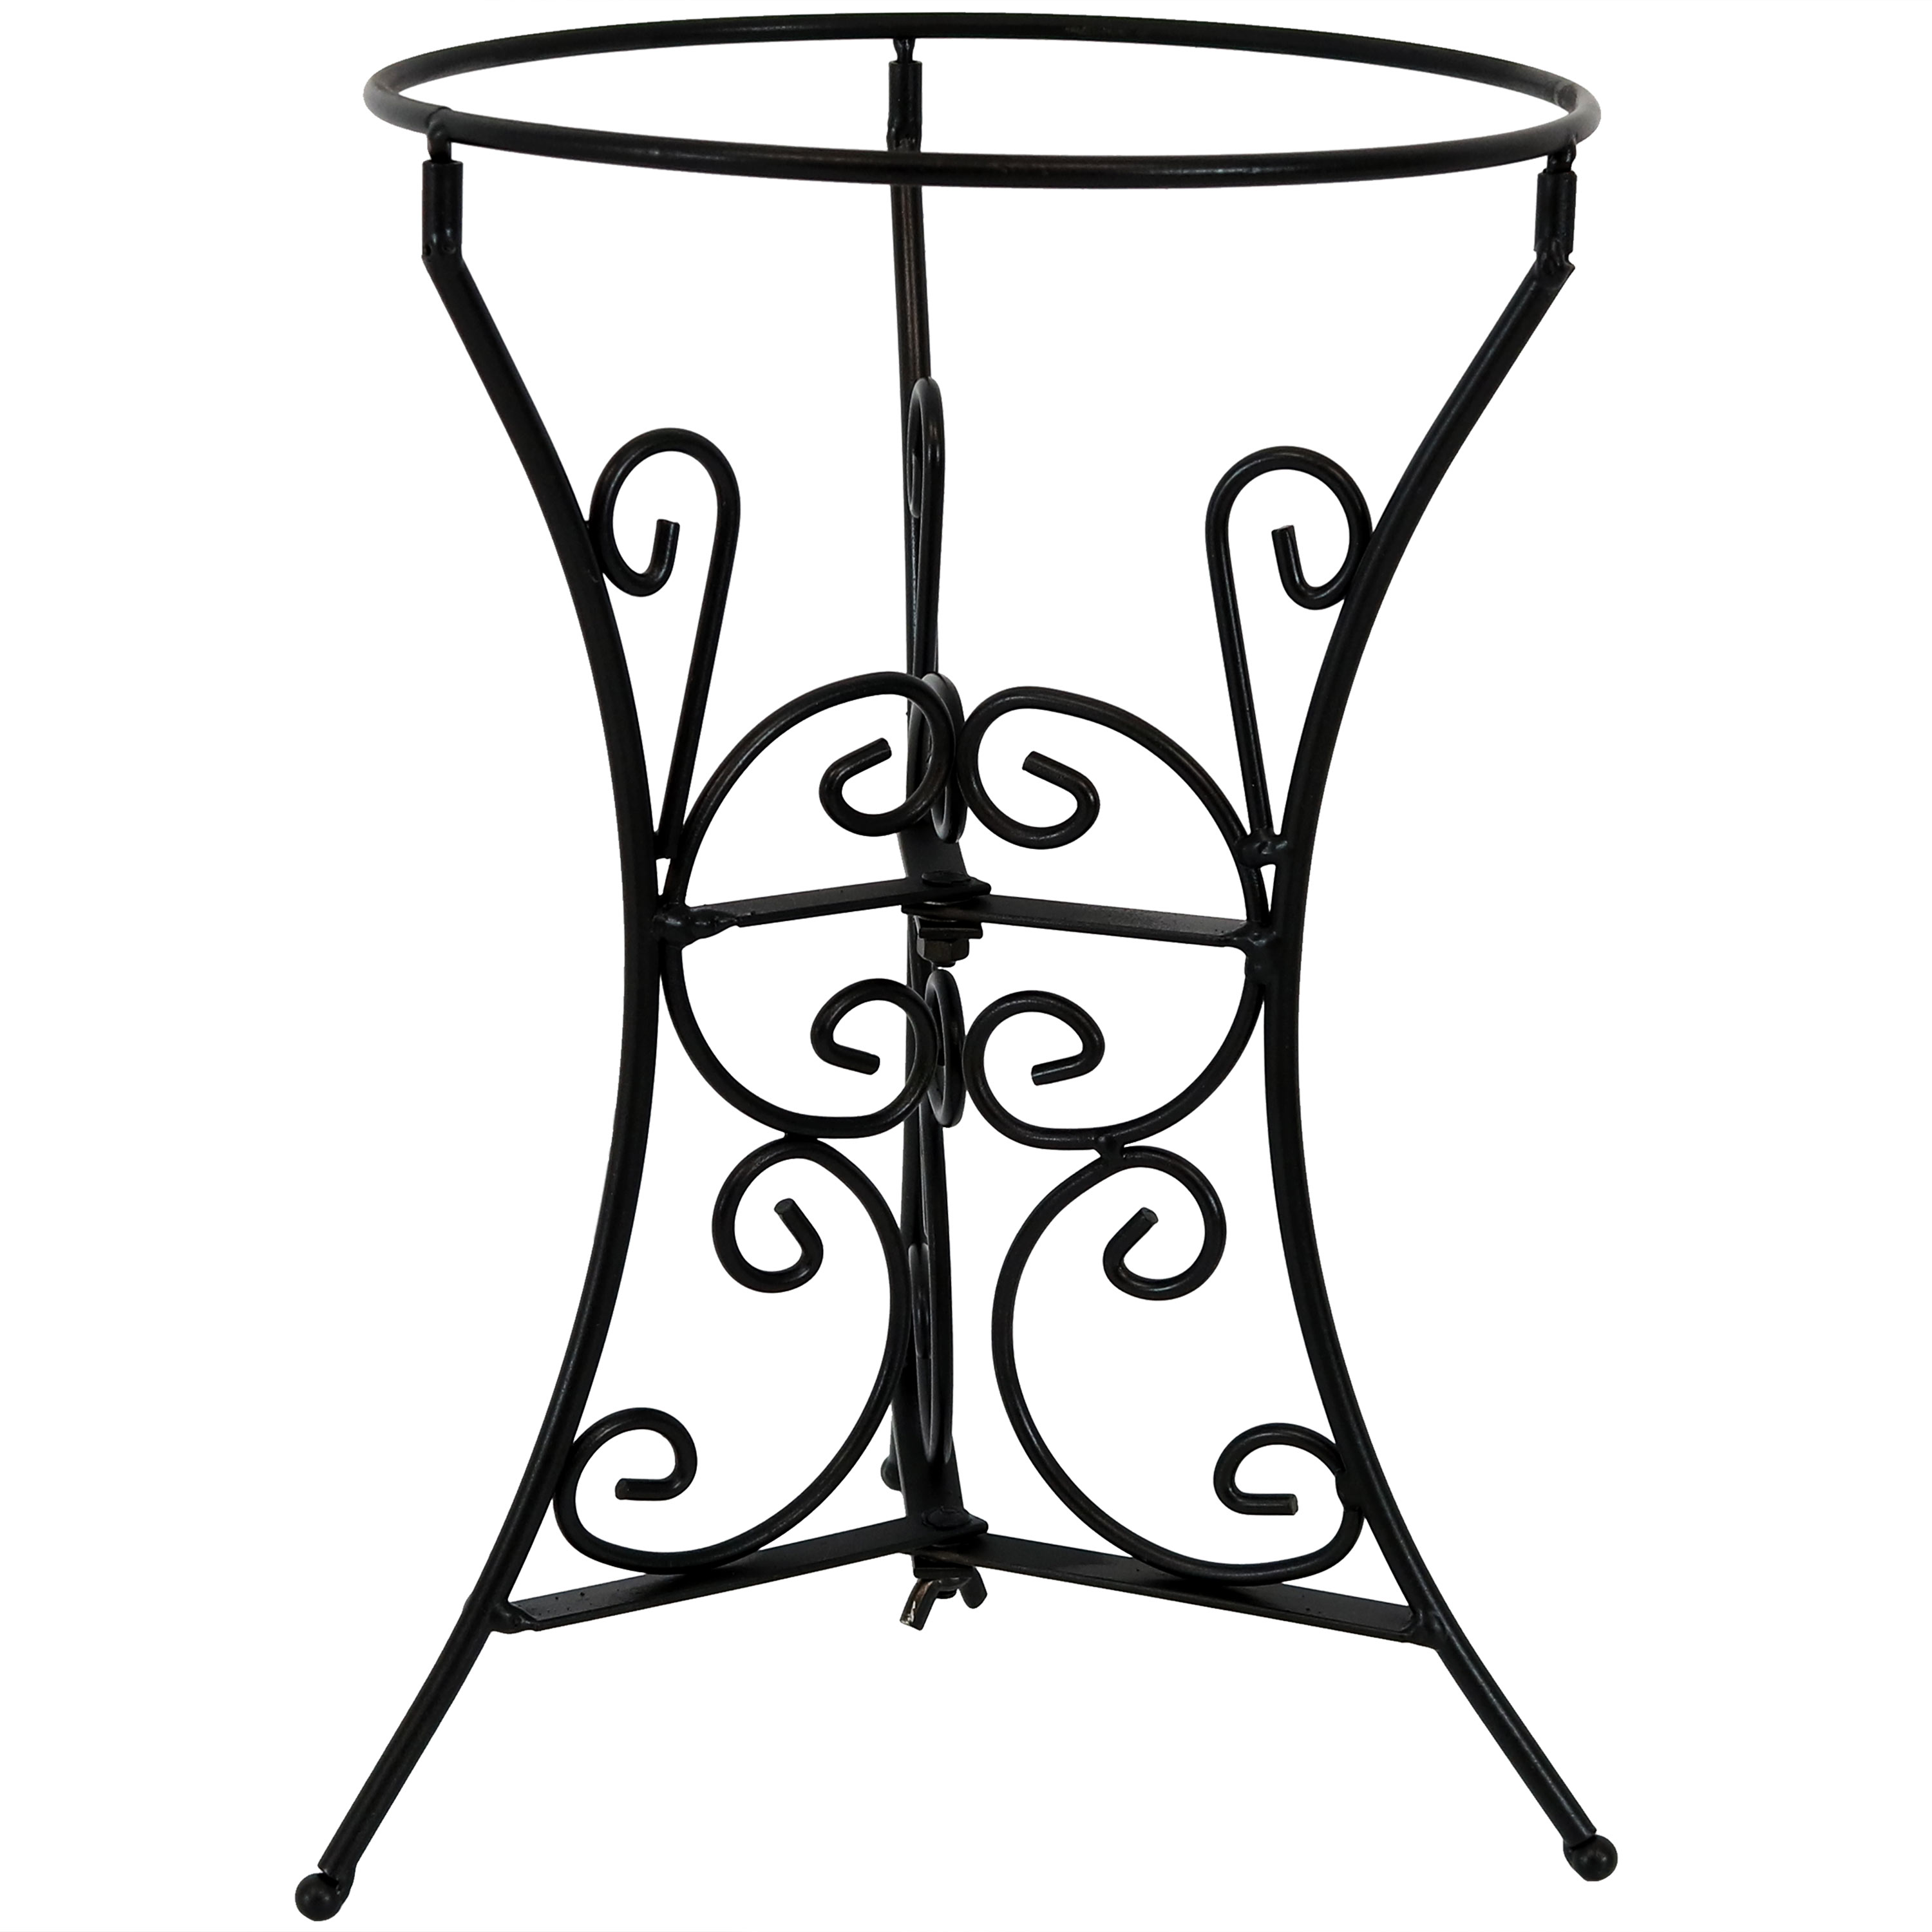 Decorative Scroll Steel Outdoor Gazing Globe Stand - Black